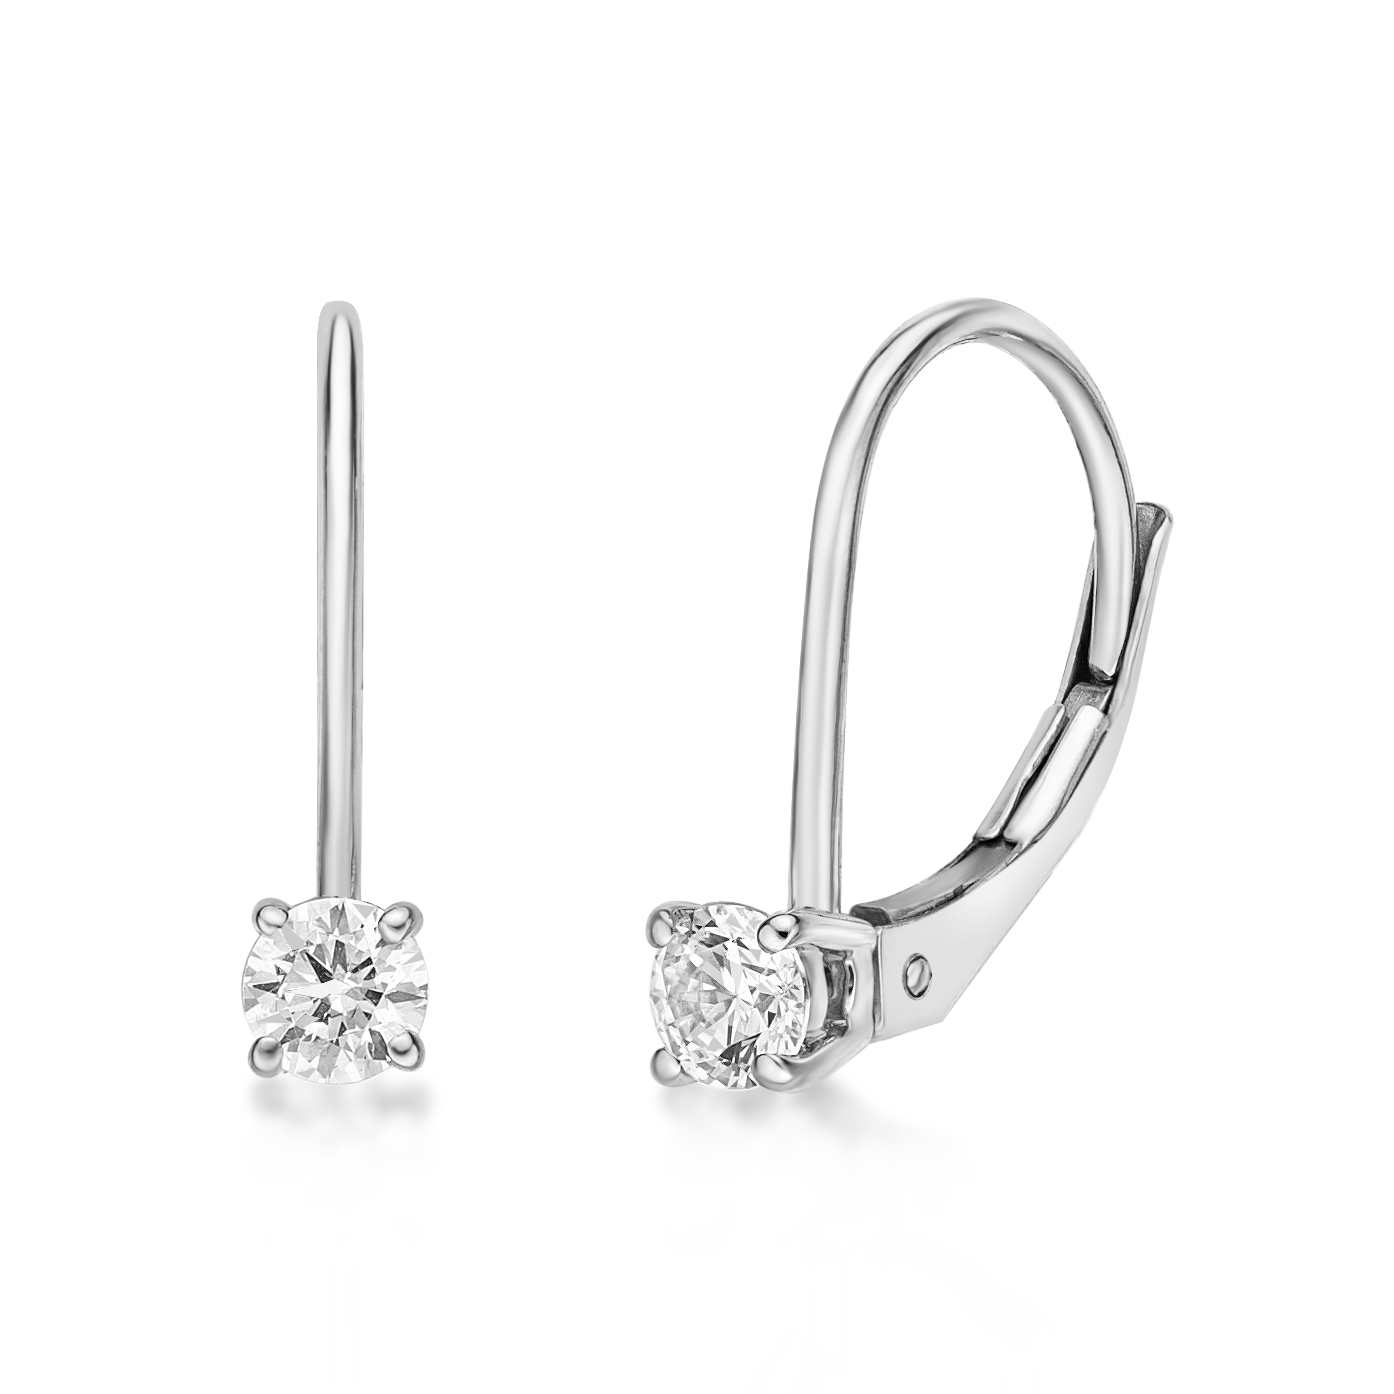 51138-earrings-lab-grown-diamond-white-gold-.jpg